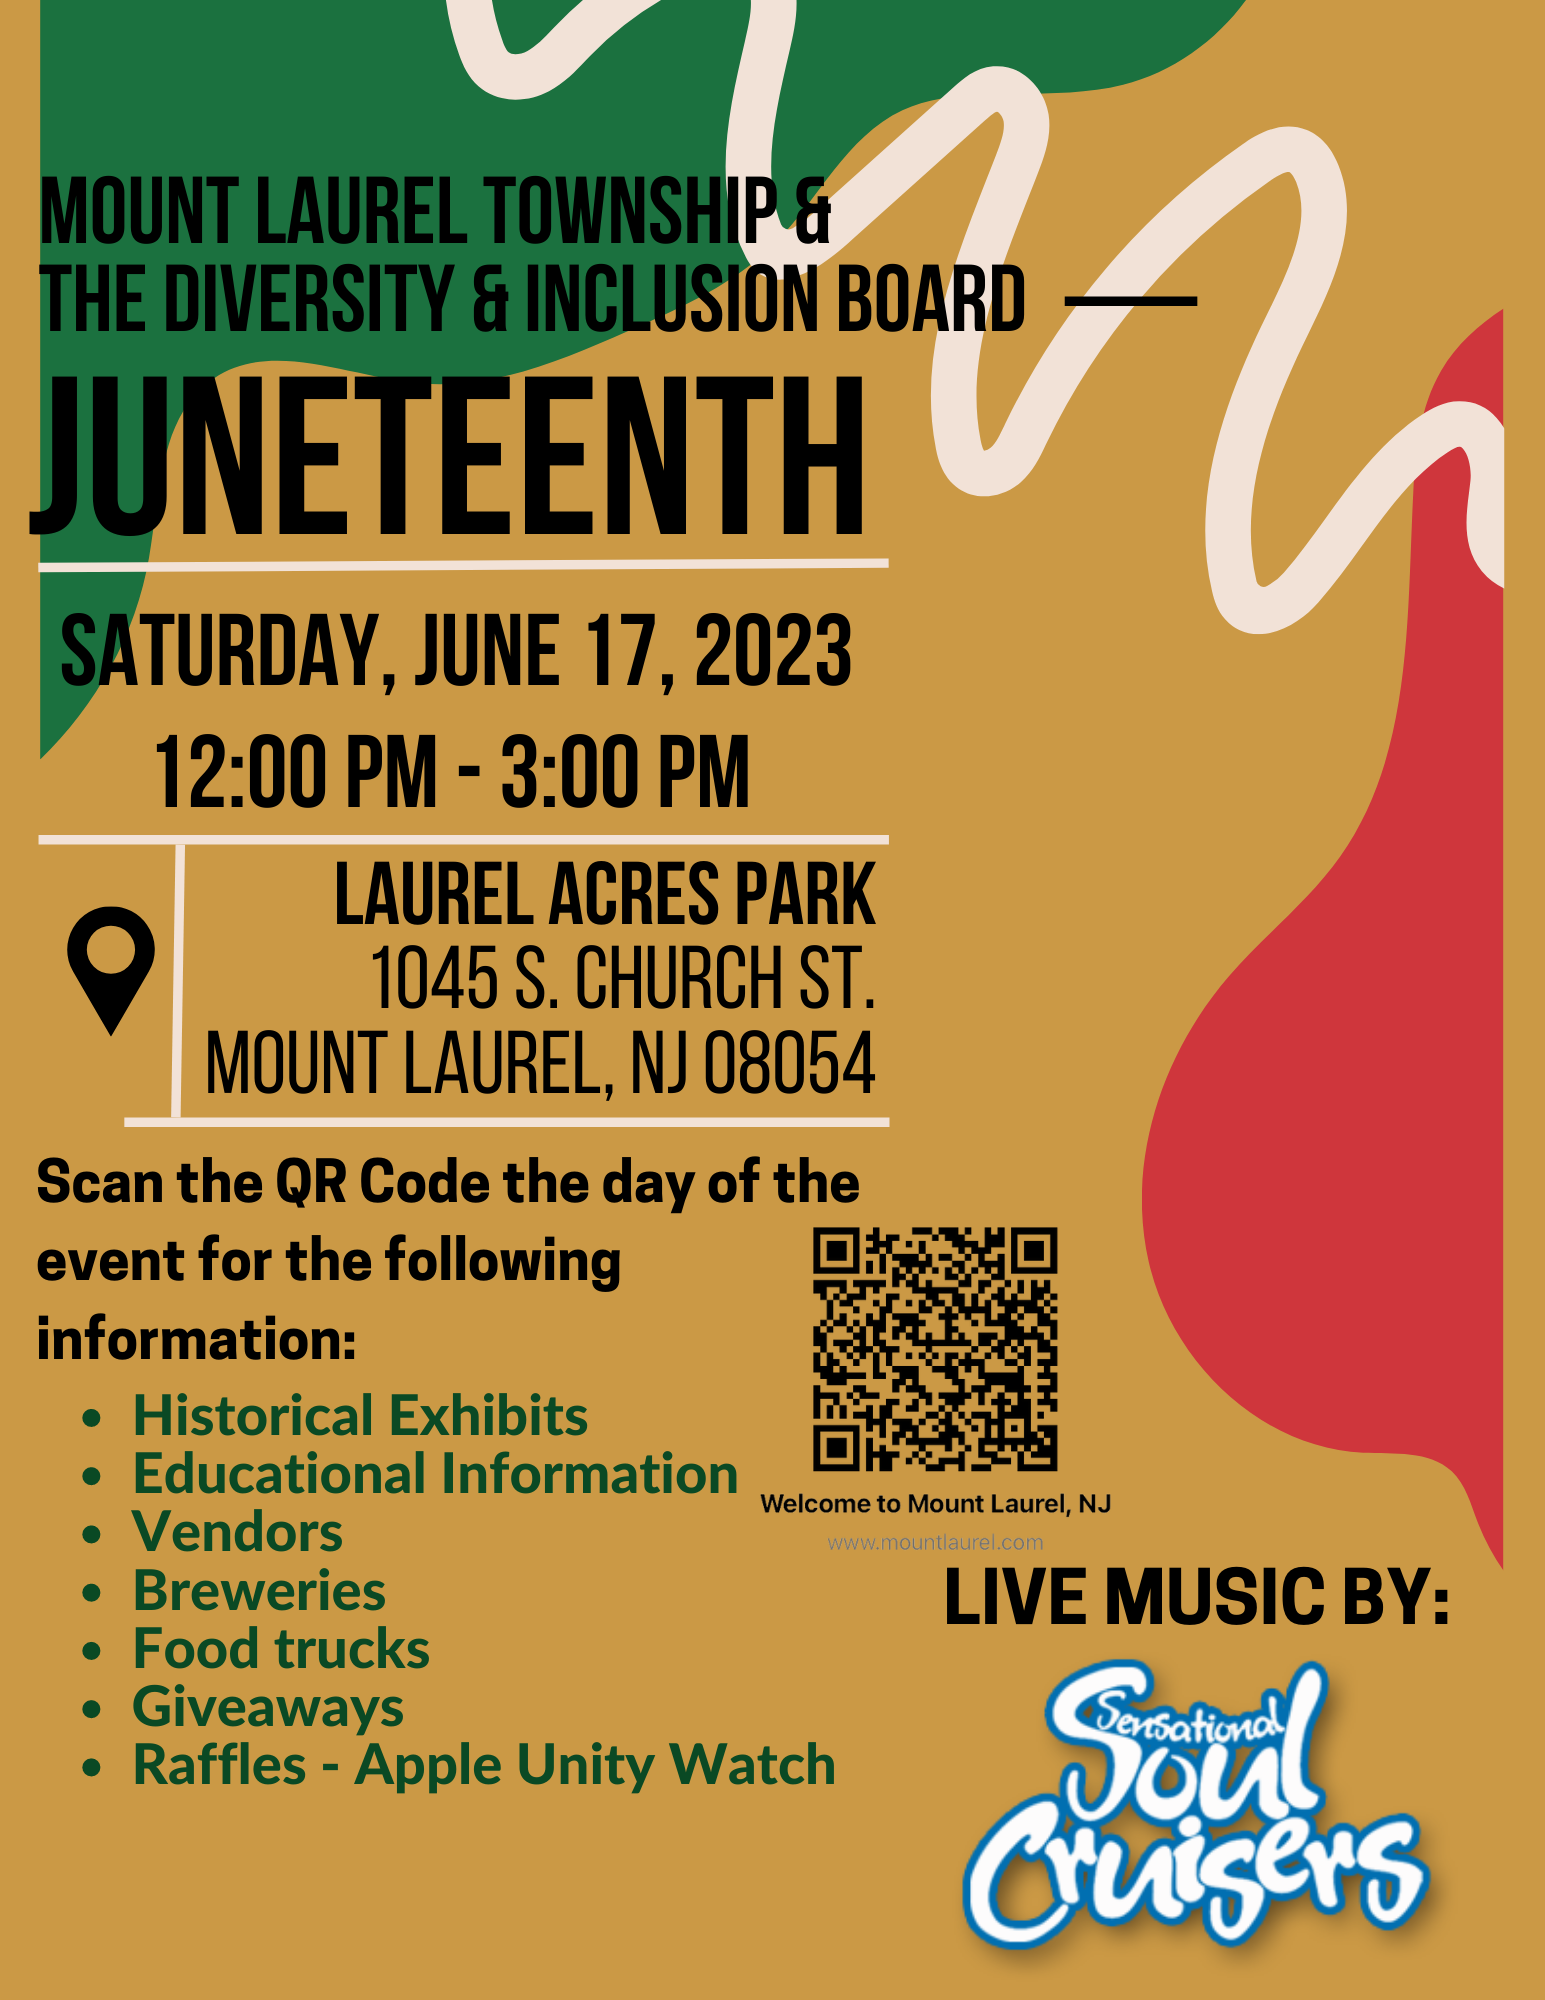 Mount Laurel Juneteenth | Saturday, June 17, 2023